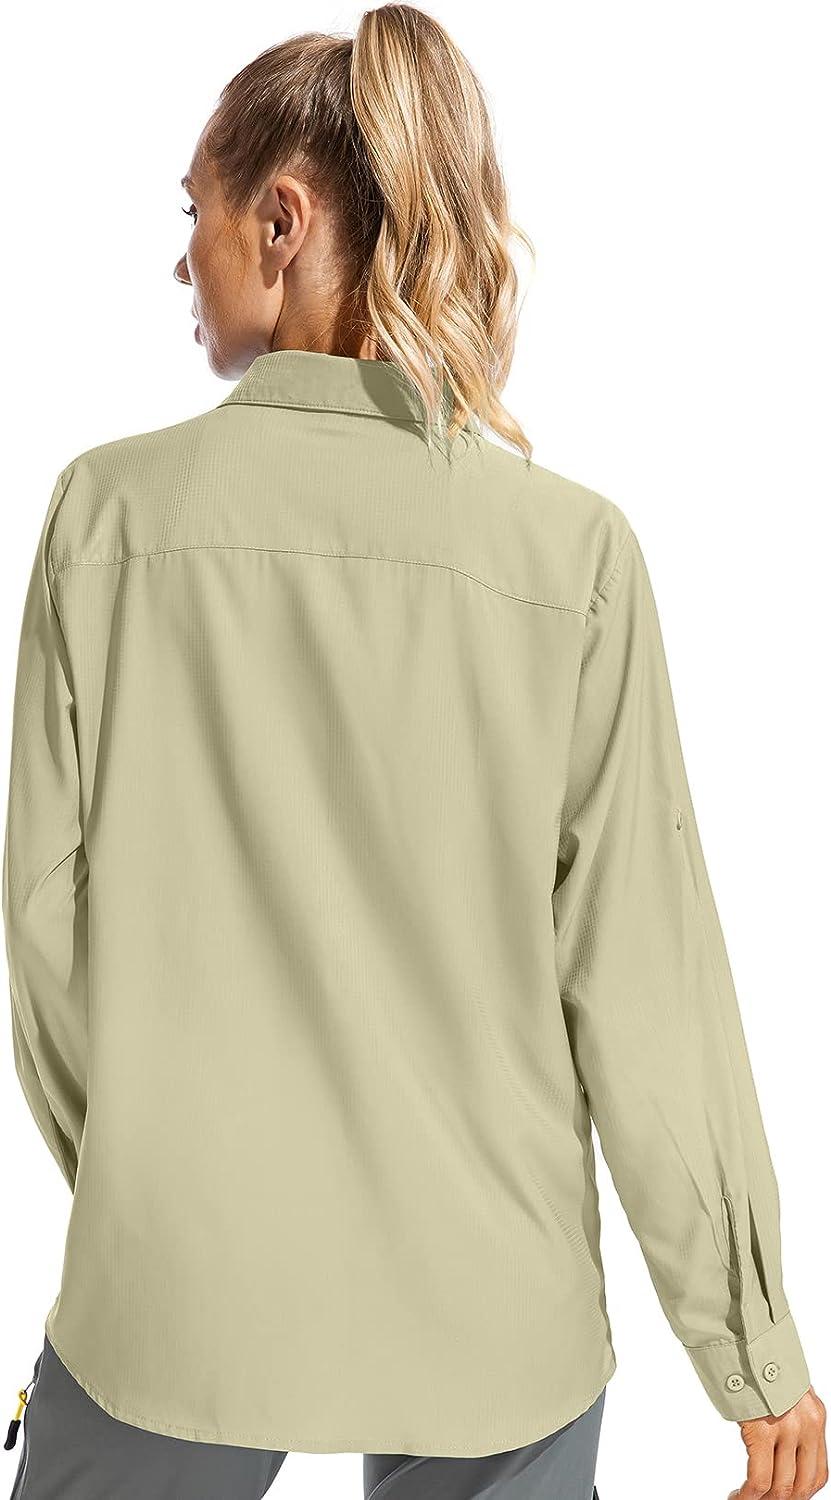 Women's Long Sleeve Safari Clothes UPF 50+ Hiking Fishing Shirts,Sun  Protection Quick Dry Light Cooling Shirts Khaki Small